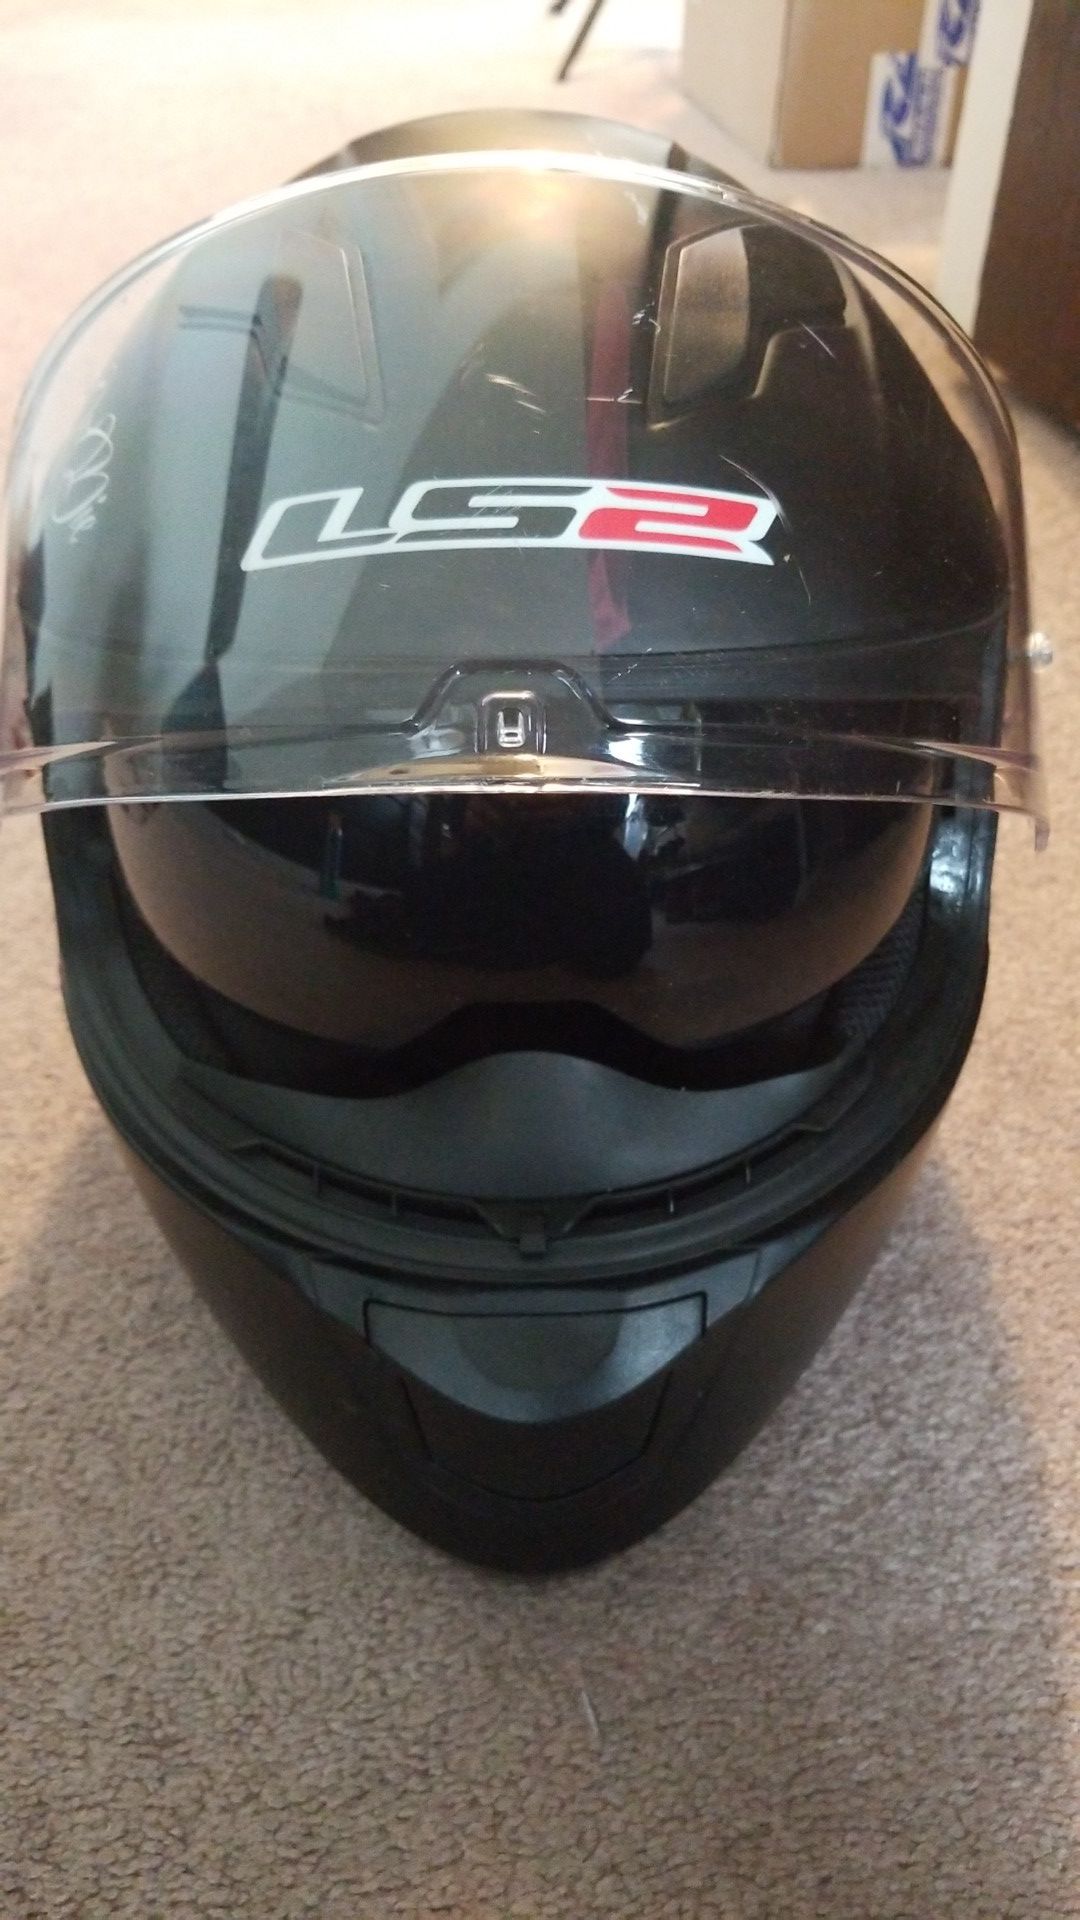 Ls2 motorcycle helmet